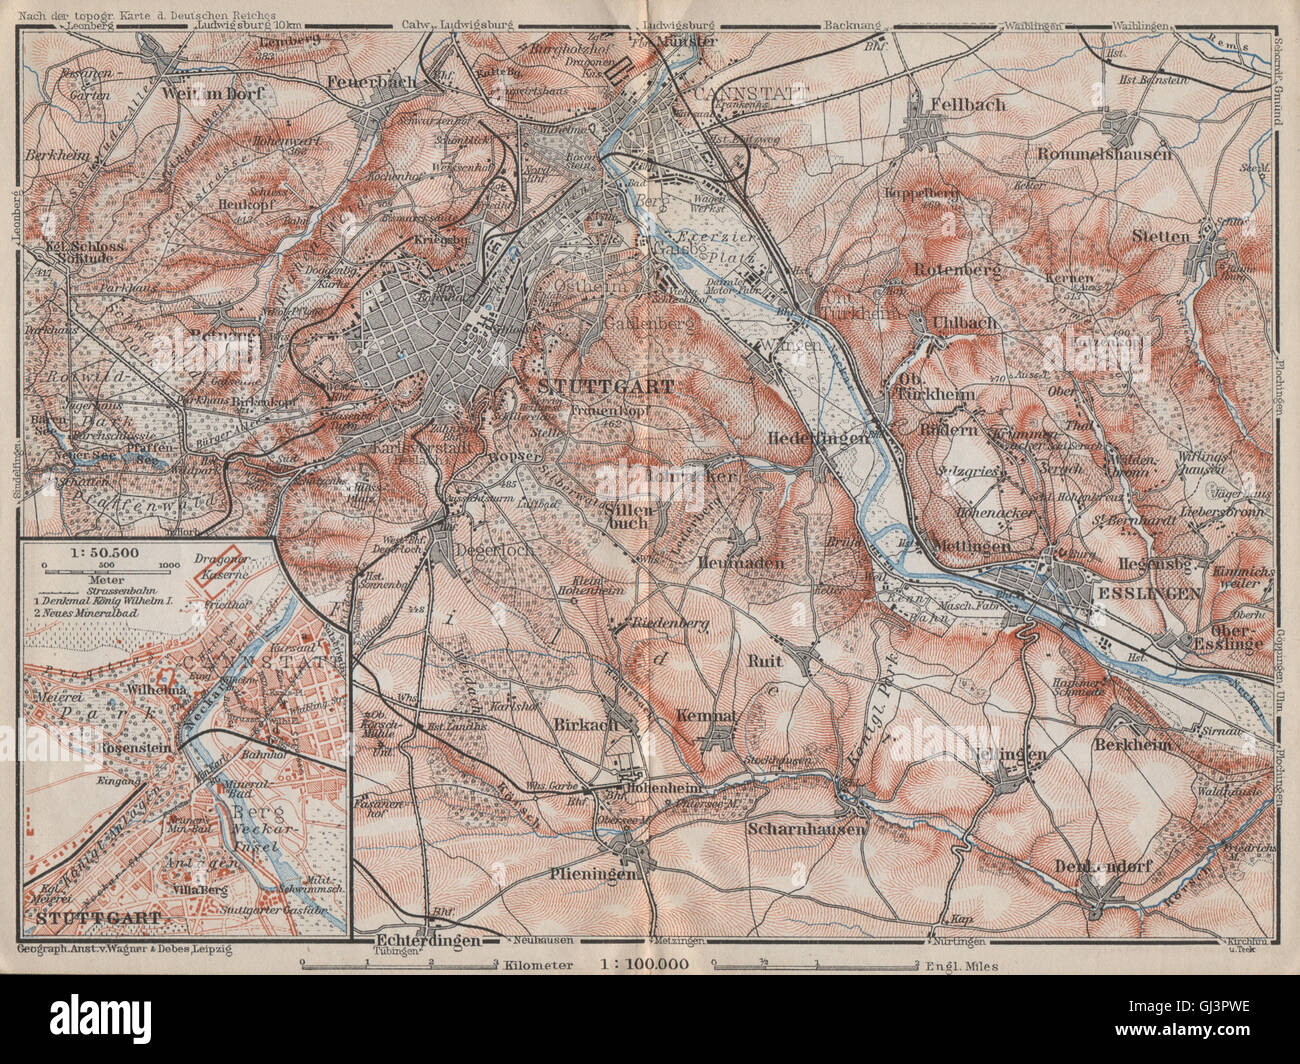 STUTTGART Umgebung/Umgebung. Cannstatt Esslingen Fellbach Hommelshausen, 1910-Karte Stockfoto